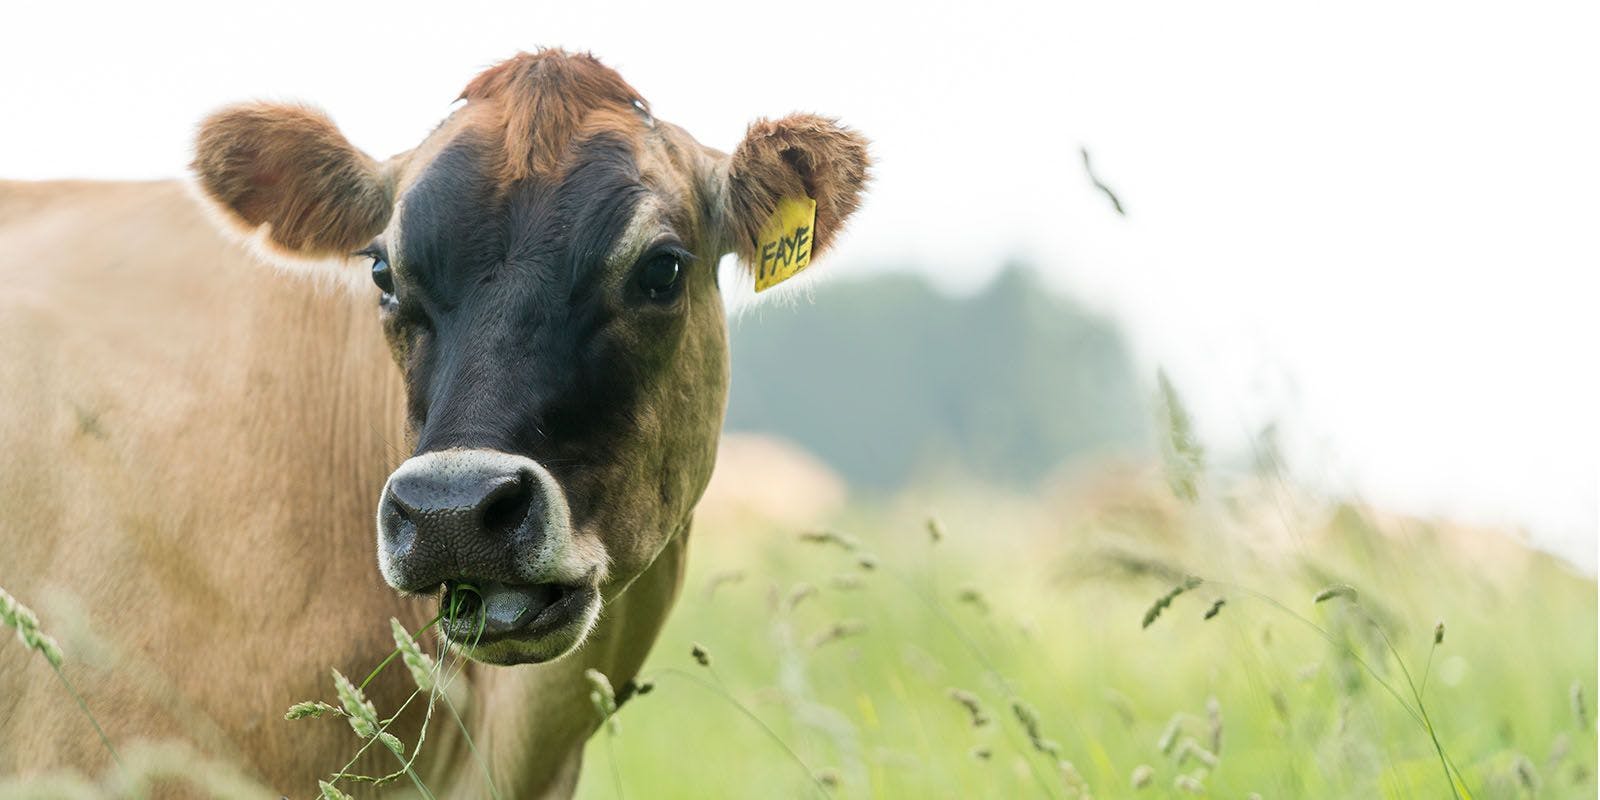 Cow names "Faye" enjoys fresh grass on the pasture of the Bansen farm in Oregon.